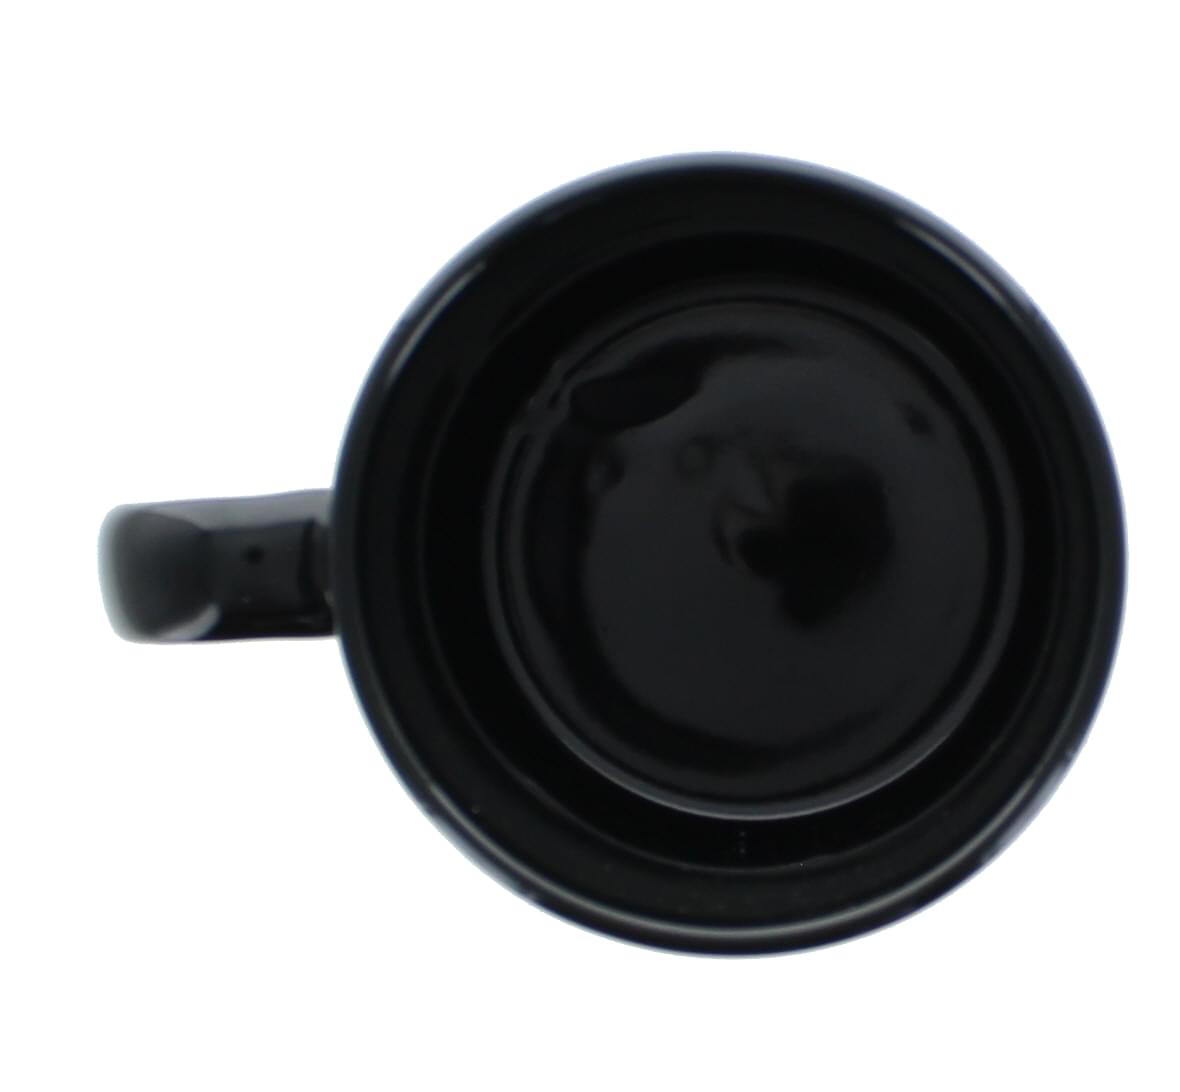 PlayStation Logo and Icons Black Ceramic Coffee Mug - image 3 of 3